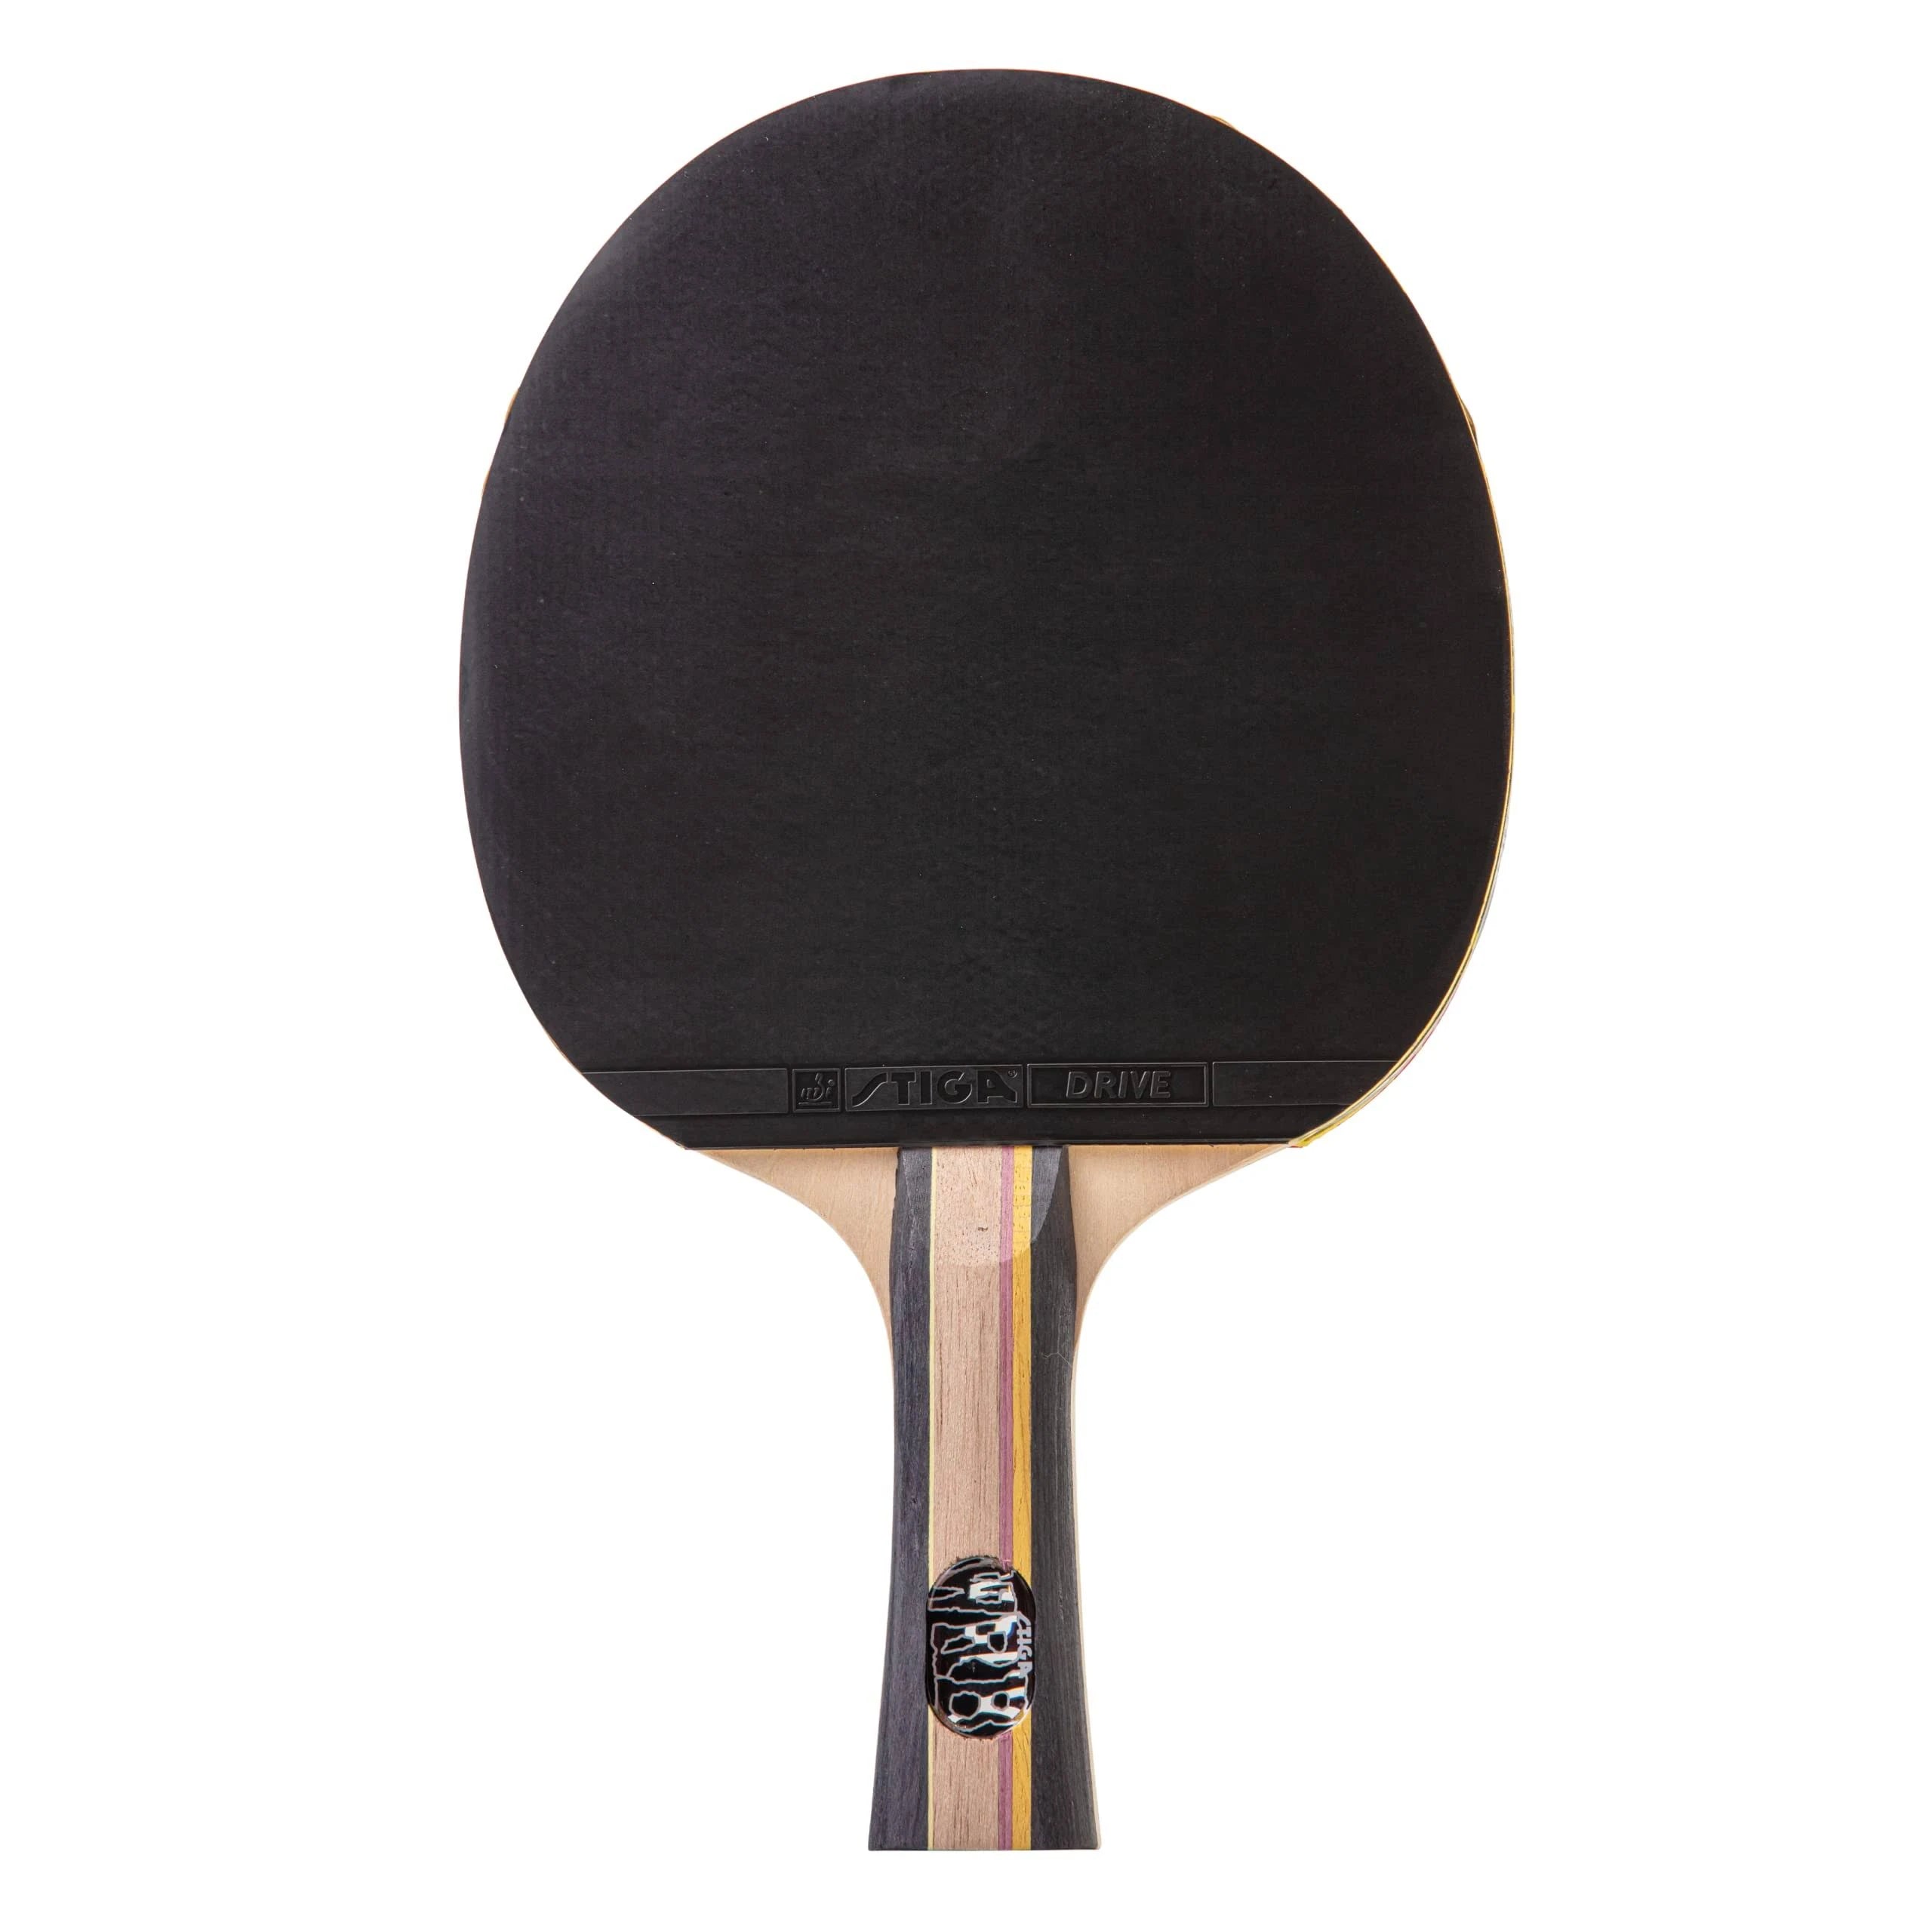 STIGA Apex Performance-Level Table Tennis Racket